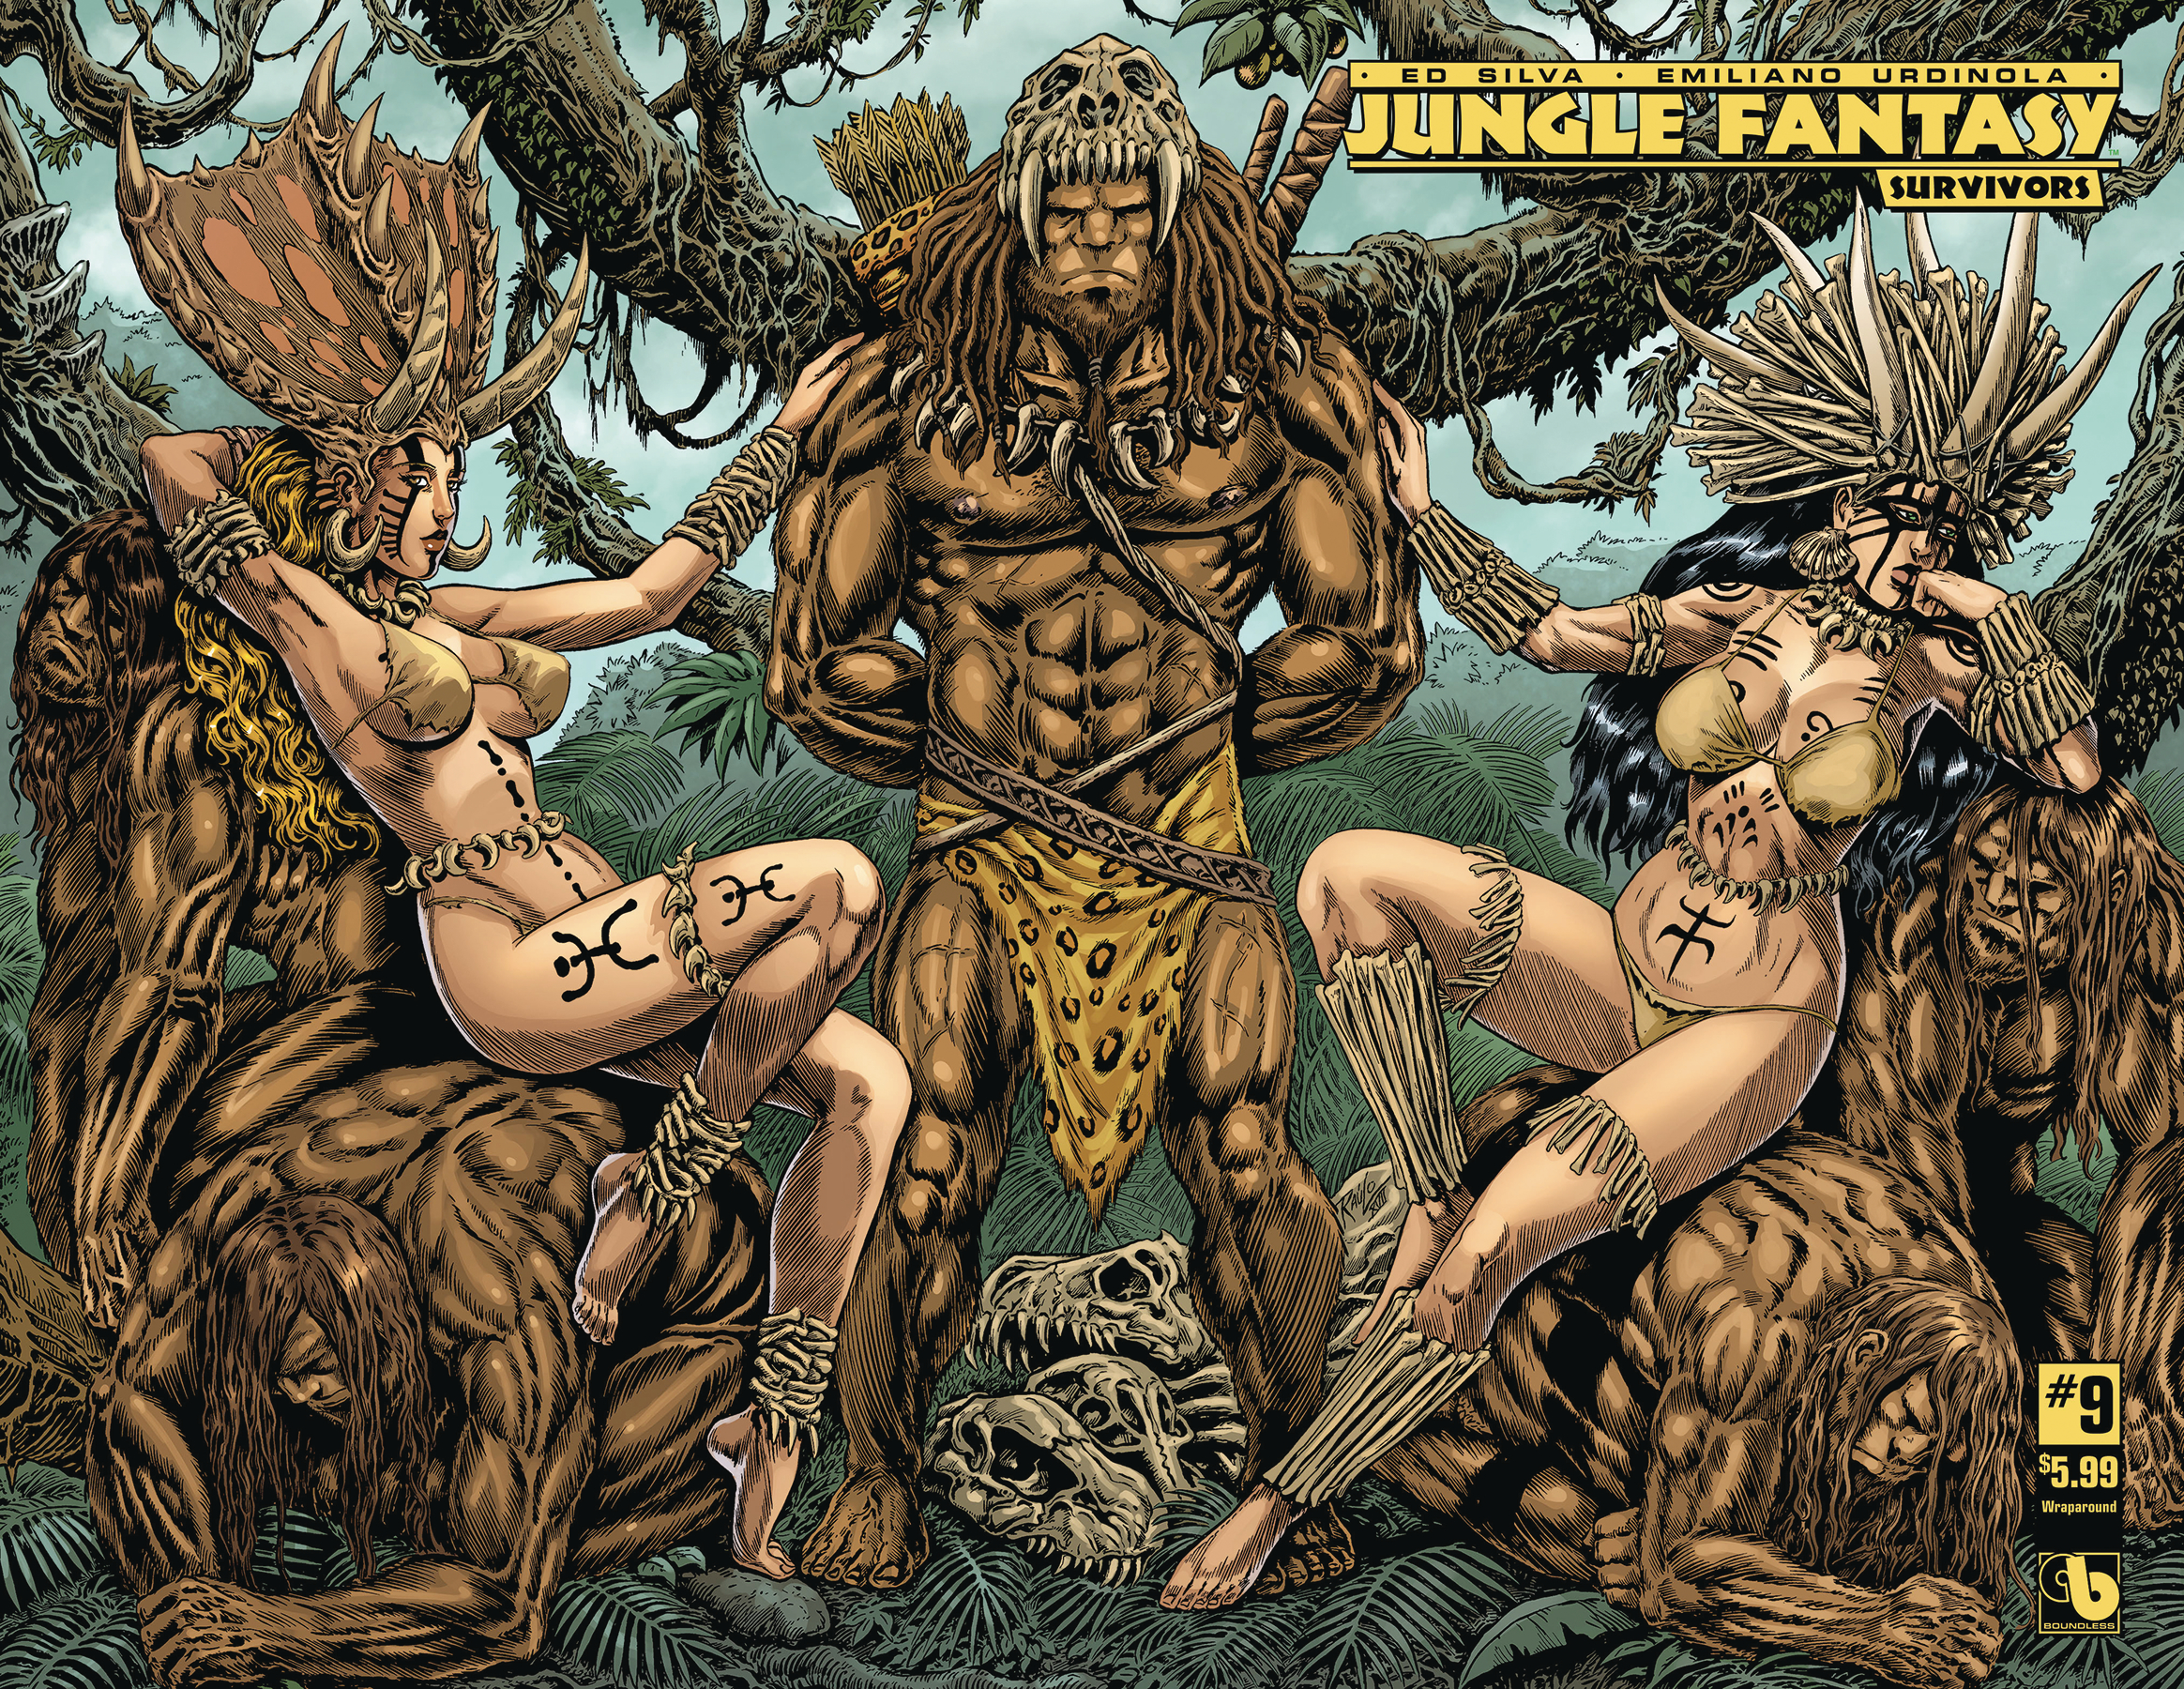 Jungle fantasy survivors #9 wrap (mr) (NOV171430) .